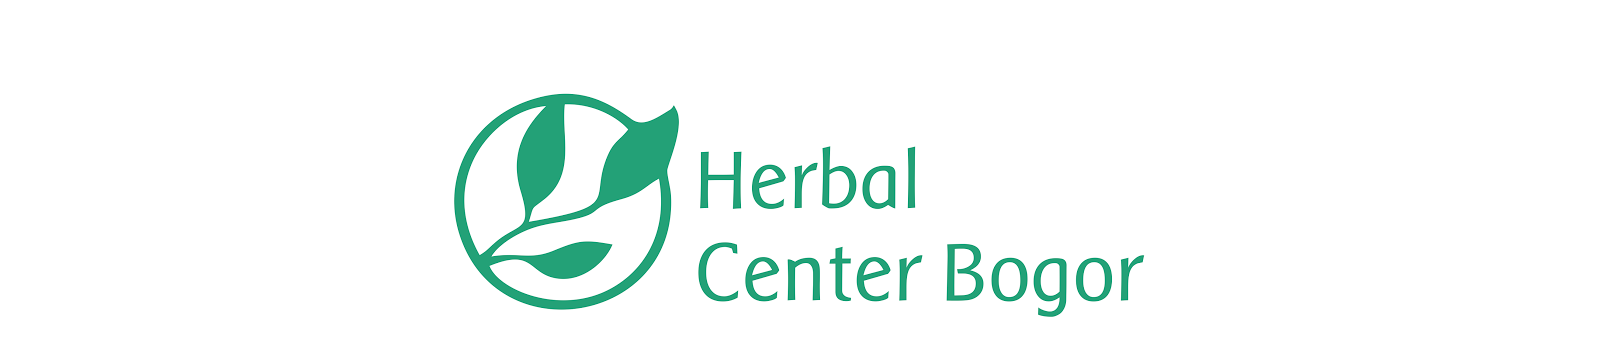 Herbal Center Bogor